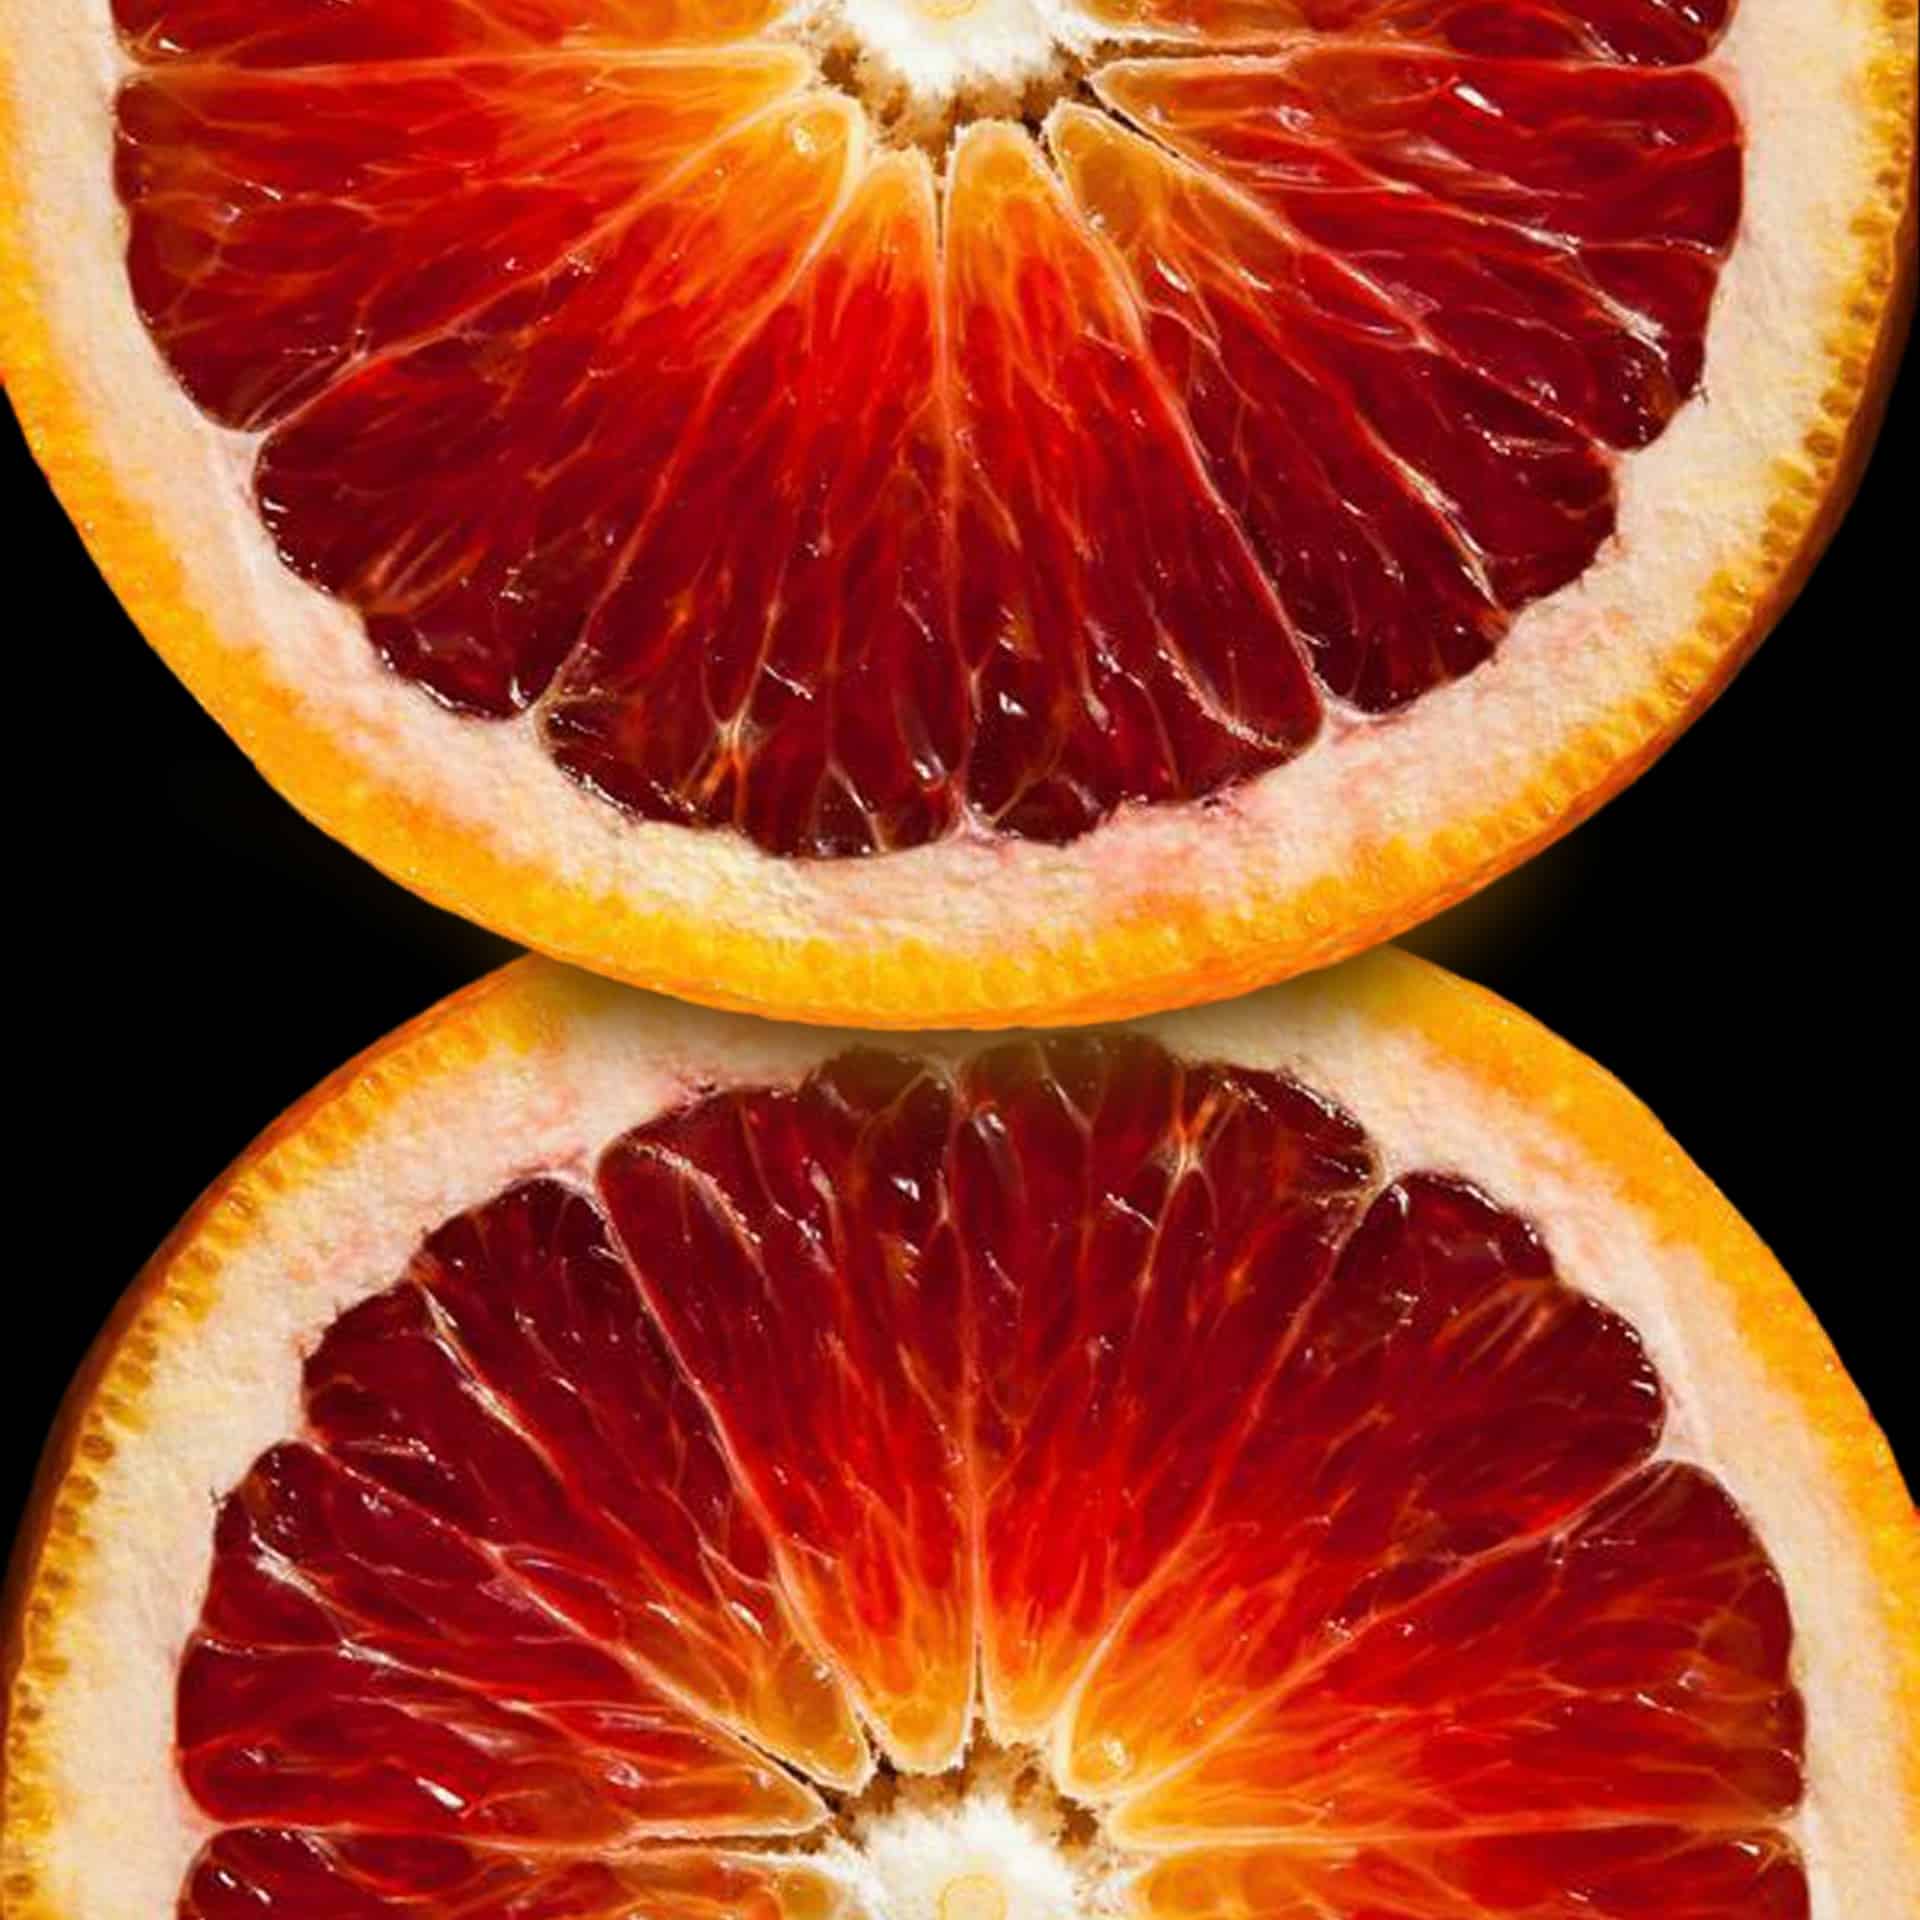 blood-orange-6346194_1920